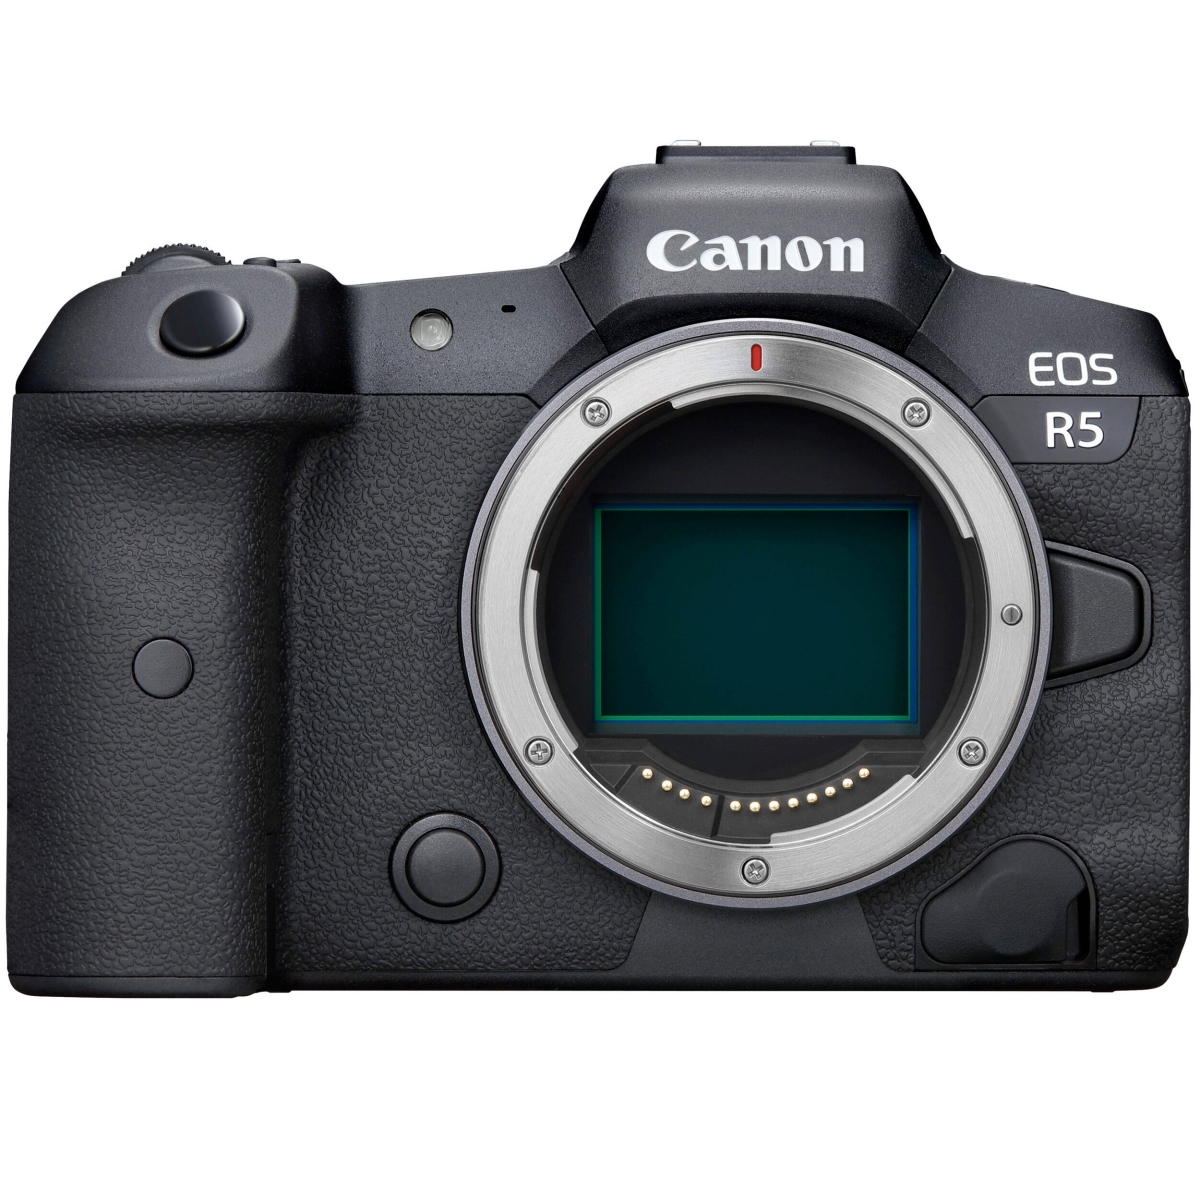 Canon 4147C002 EOS R5 Body Mirrorless Camera Body